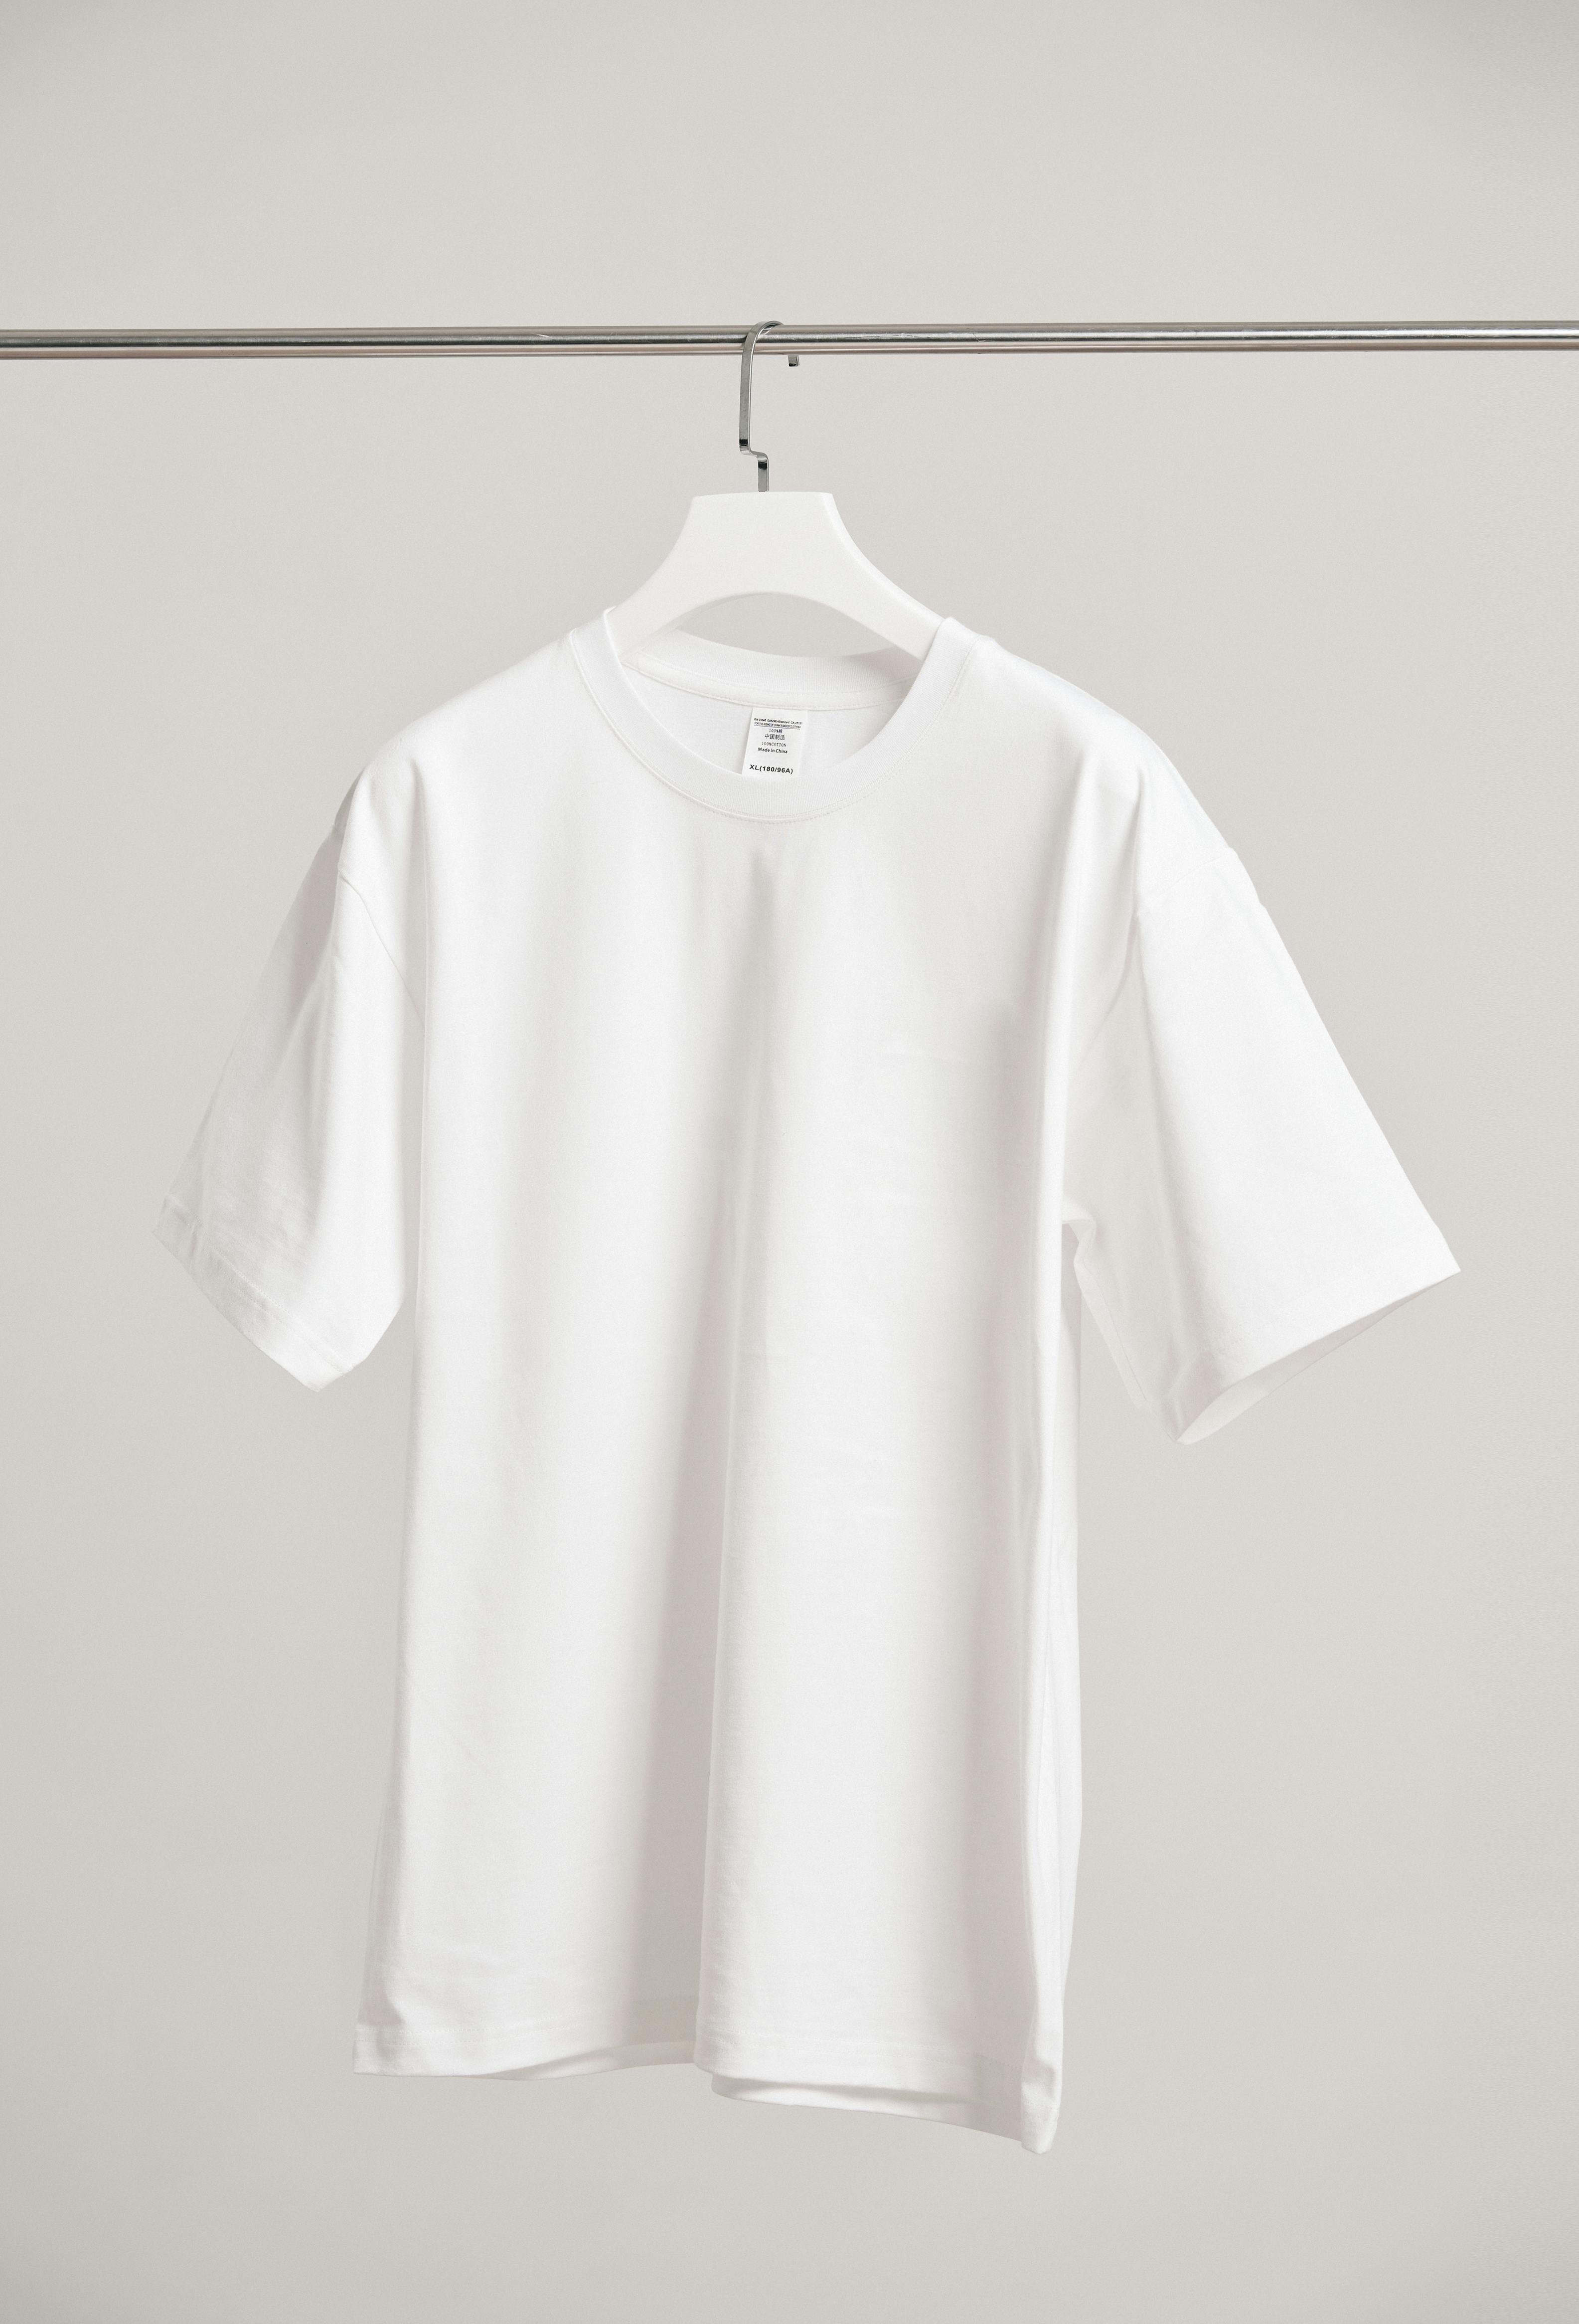 Oversized White T Shirt Loop Net French Terry 240GSM (BULK)